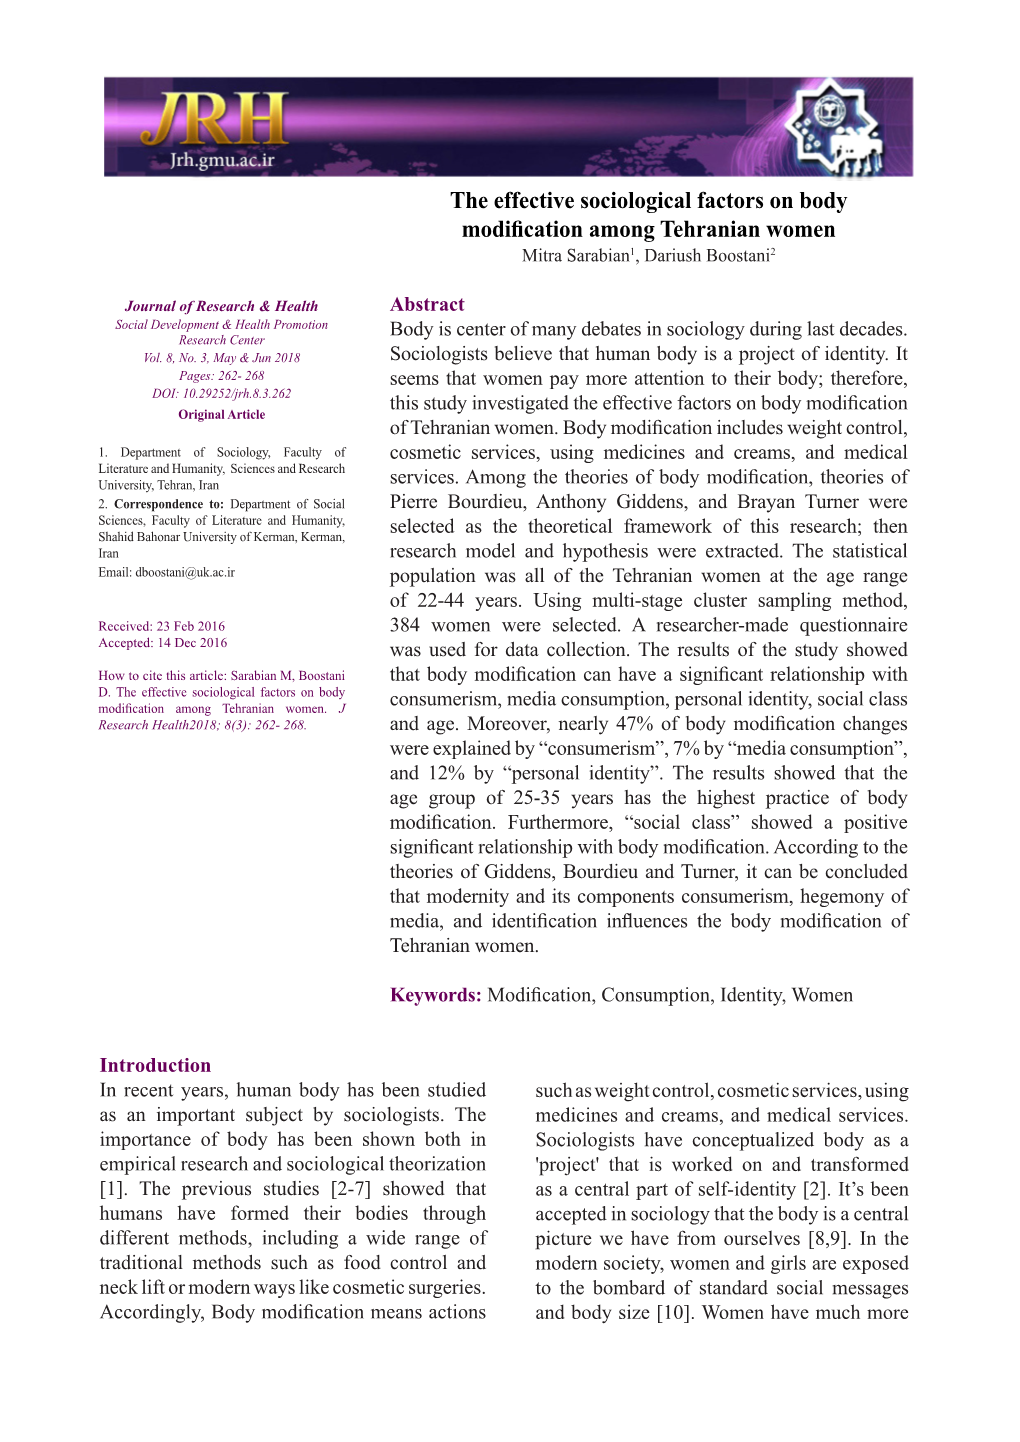 The Effective Sociological Factors on Body Modification Among Tehranian Women Mitra Sarabian1, Dariush Boostani2